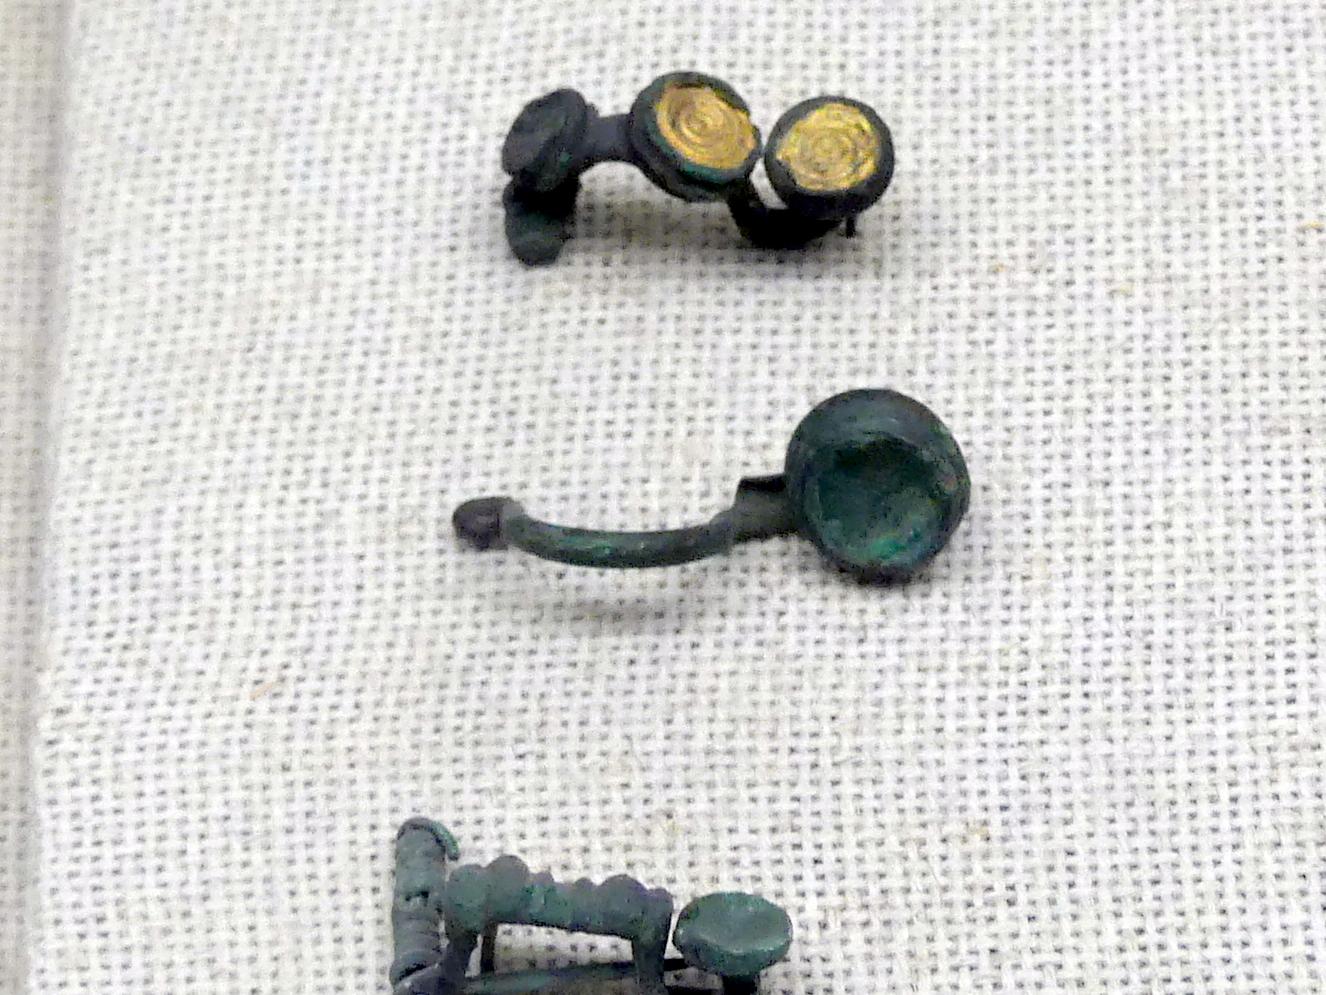 Fußzierfibel, Hallstattzeit, 700 - 200 v. Chr., Bild 1/2